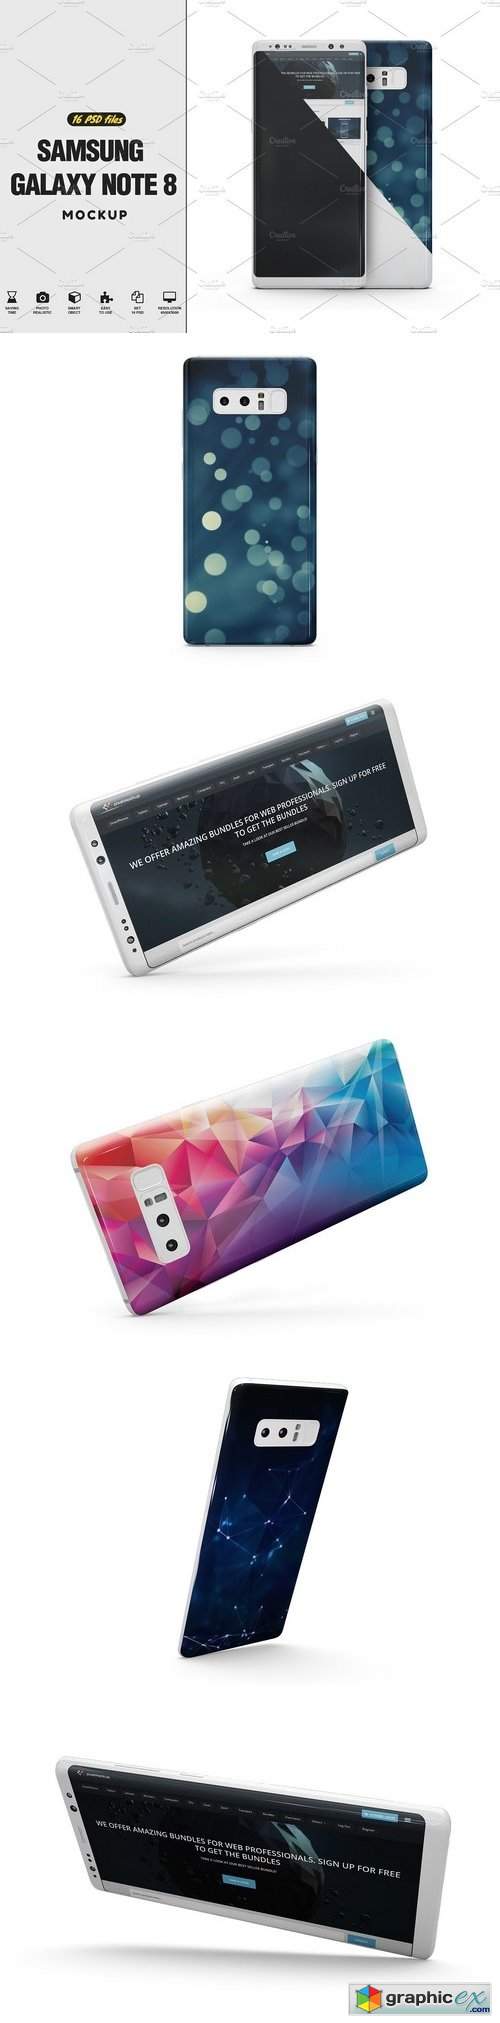 Samsung Galaxy Note 8 Vol.3 Mockup